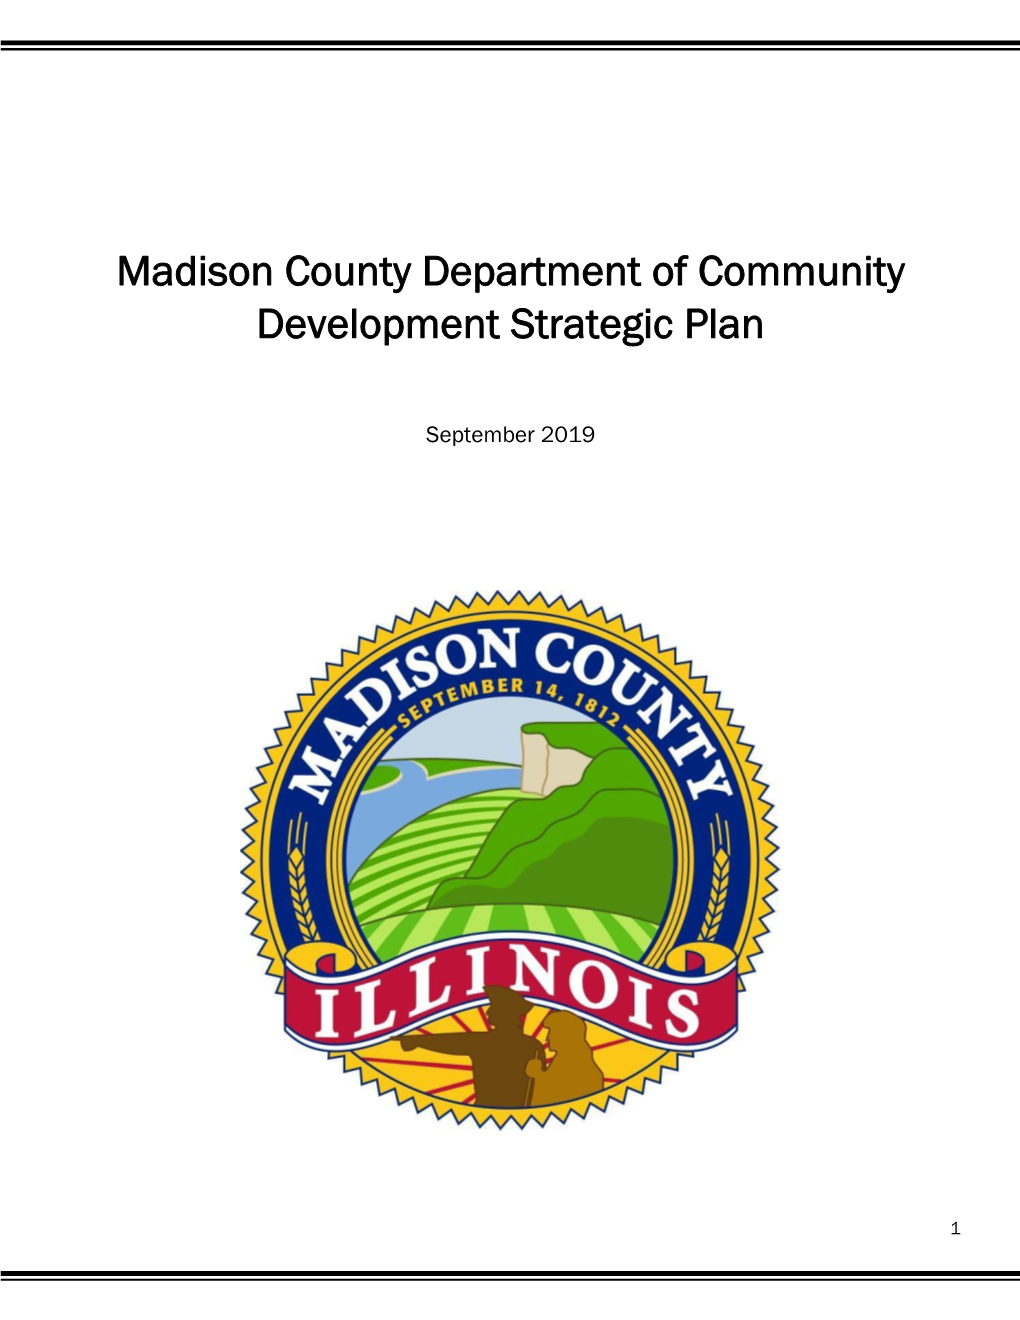 Madison County Department of Community Development Strategic Plan